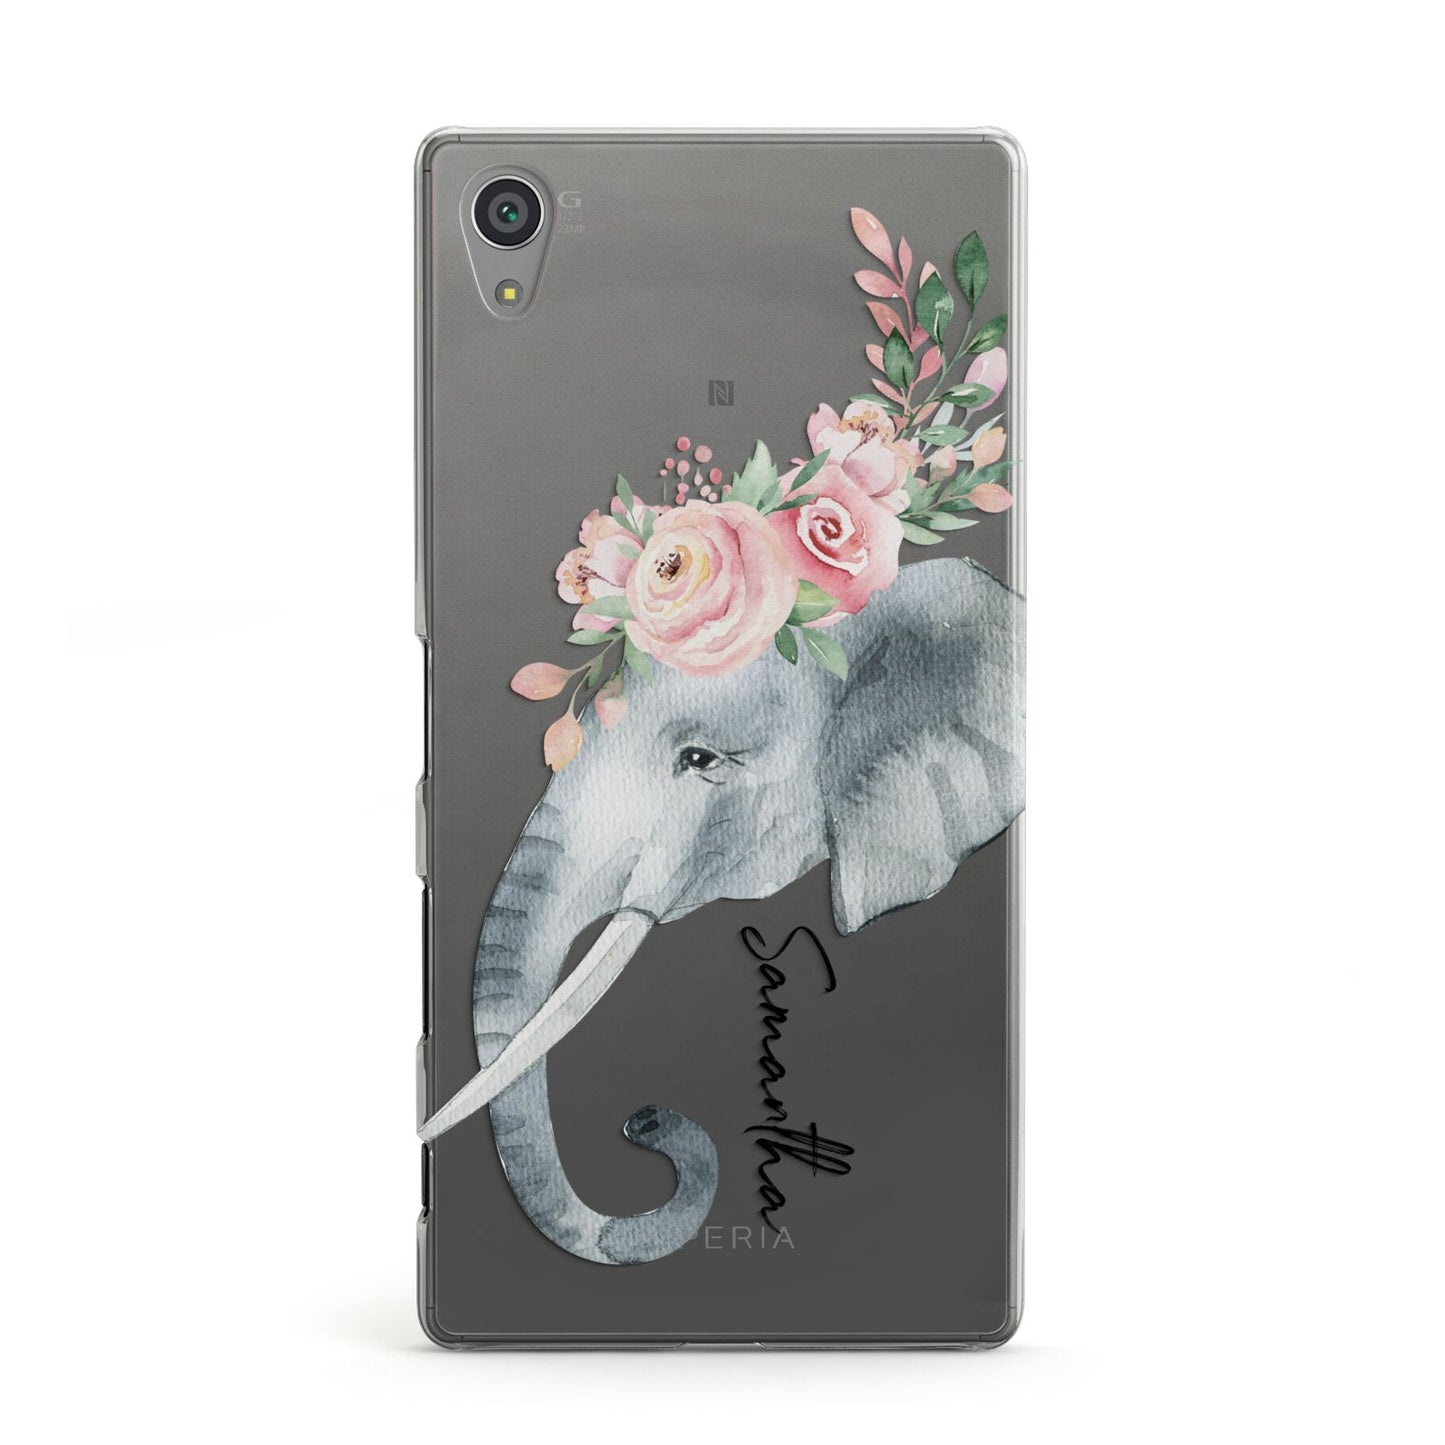 Personalised Elephant Sony Xperia Case